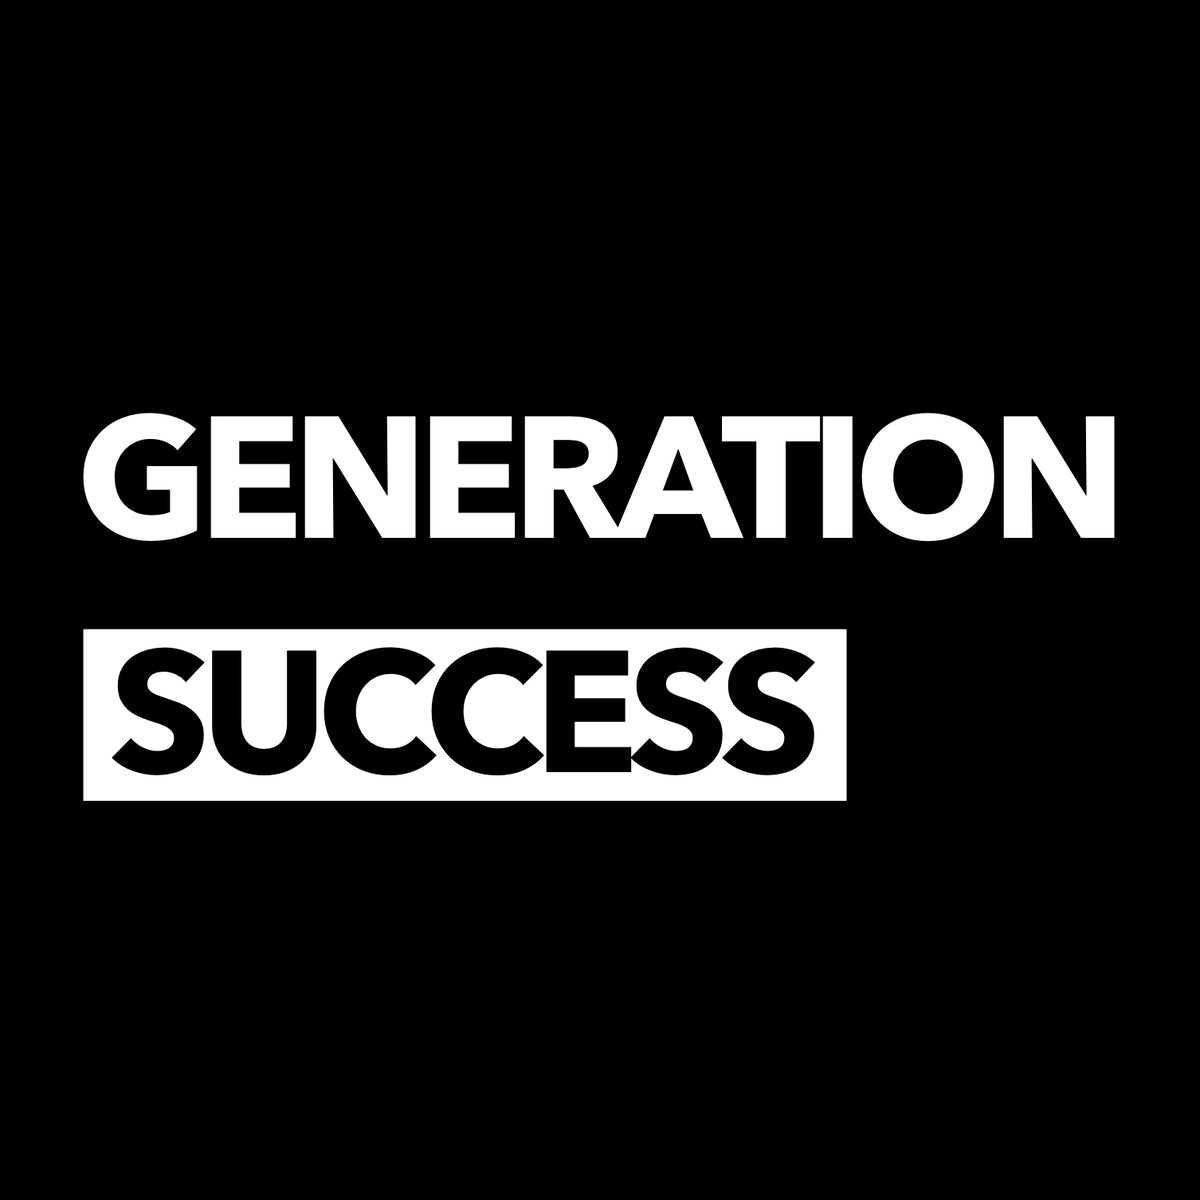 GENERATION SUCCESS